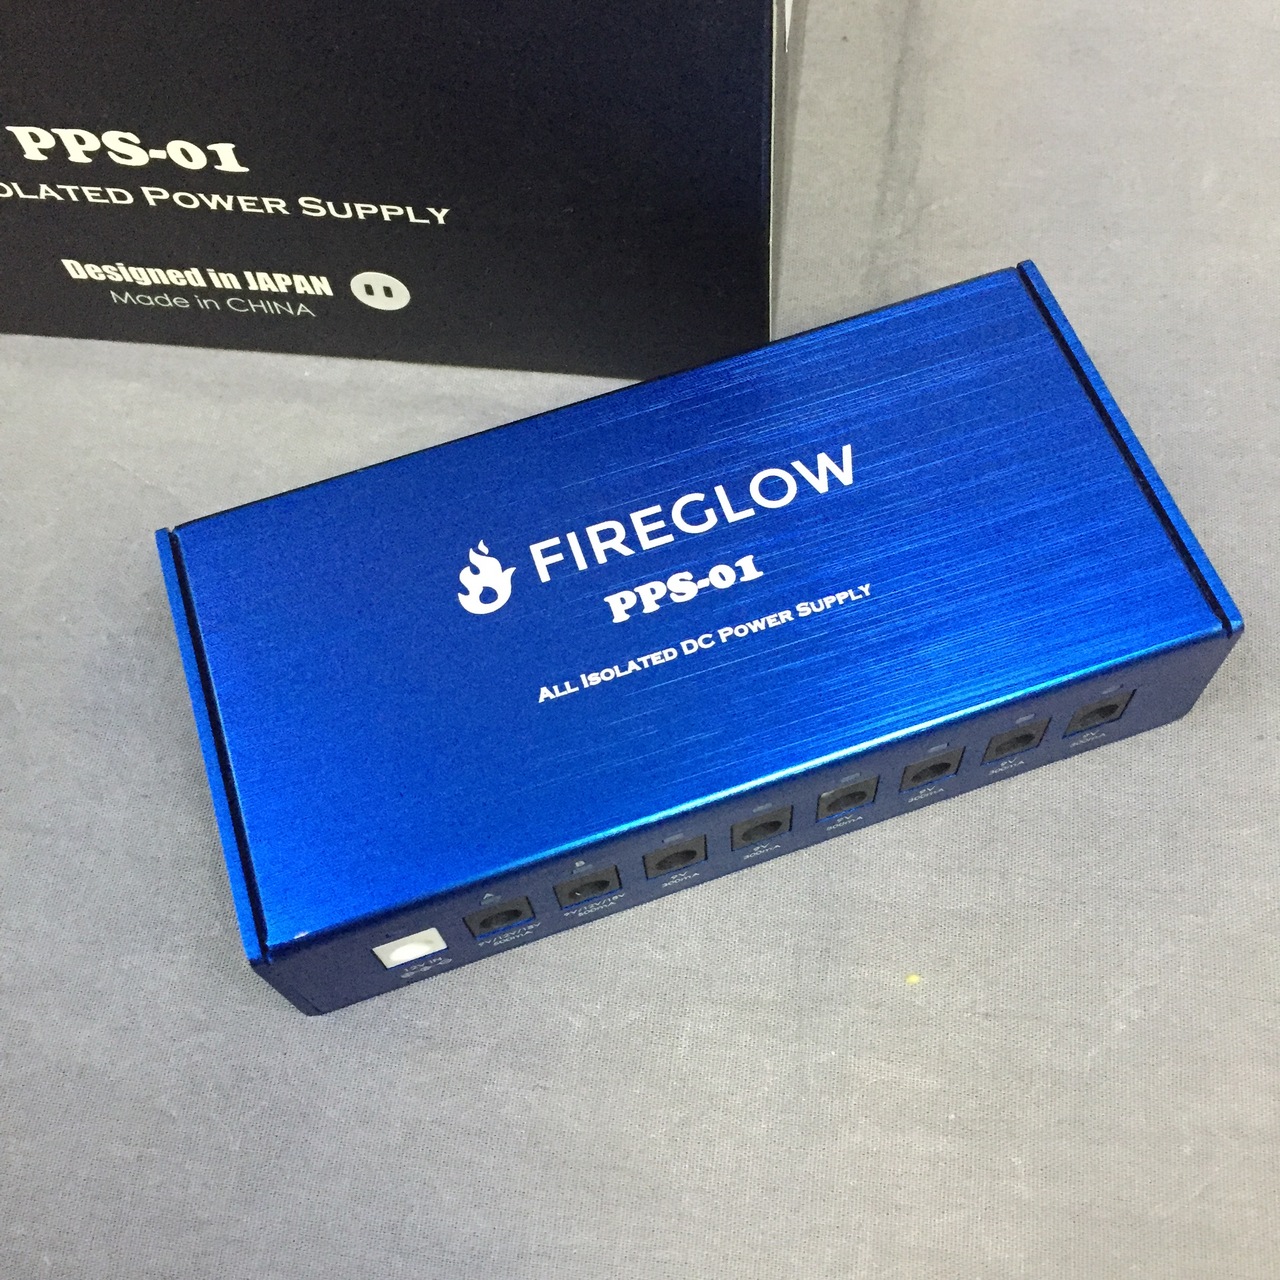 firegrow pps-01 フルアイソレートパワーサプライ